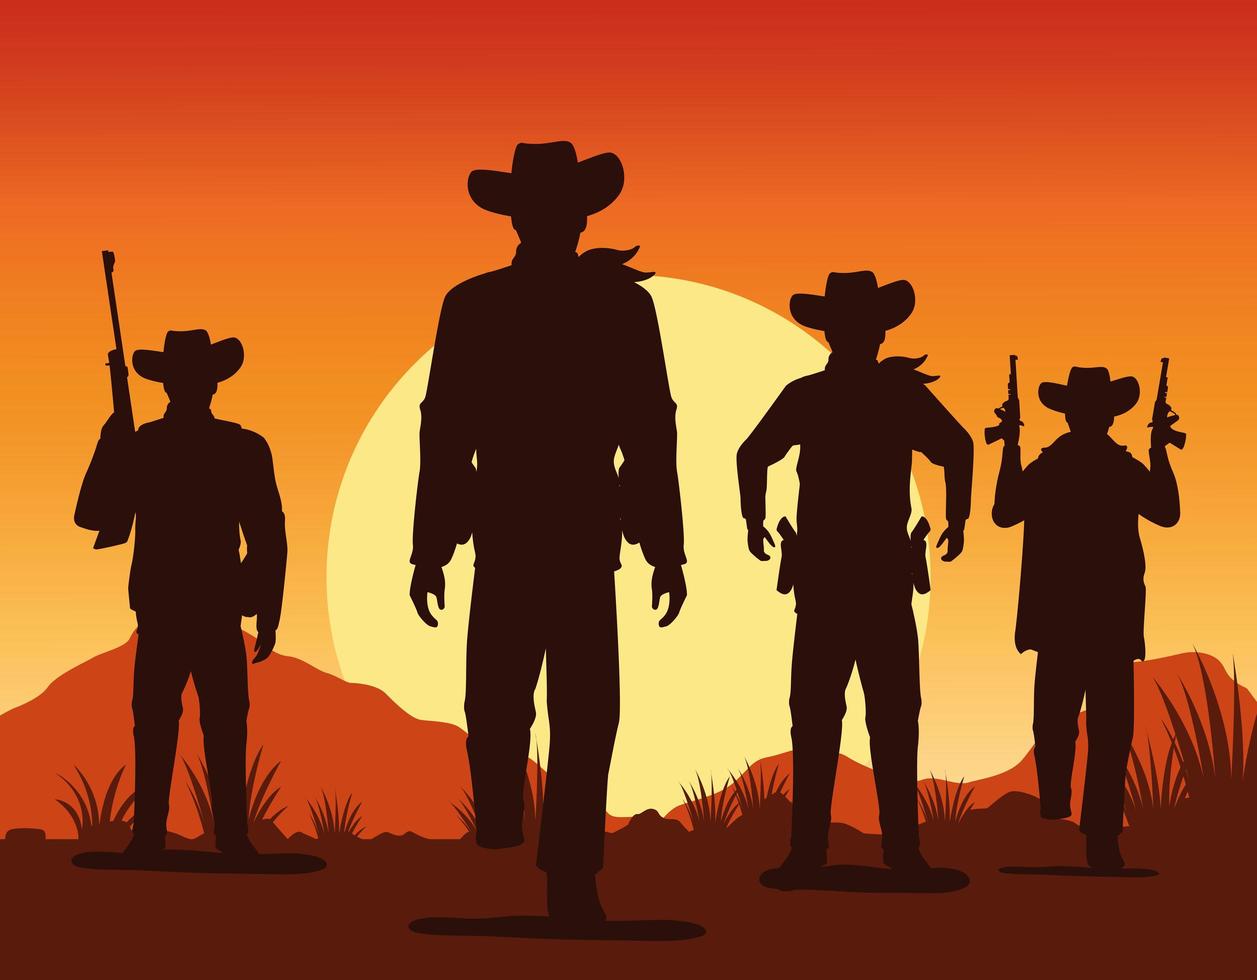 cowboys siffror silhuetter med vapen karaktärer solnedgång lansdscape scen vektor